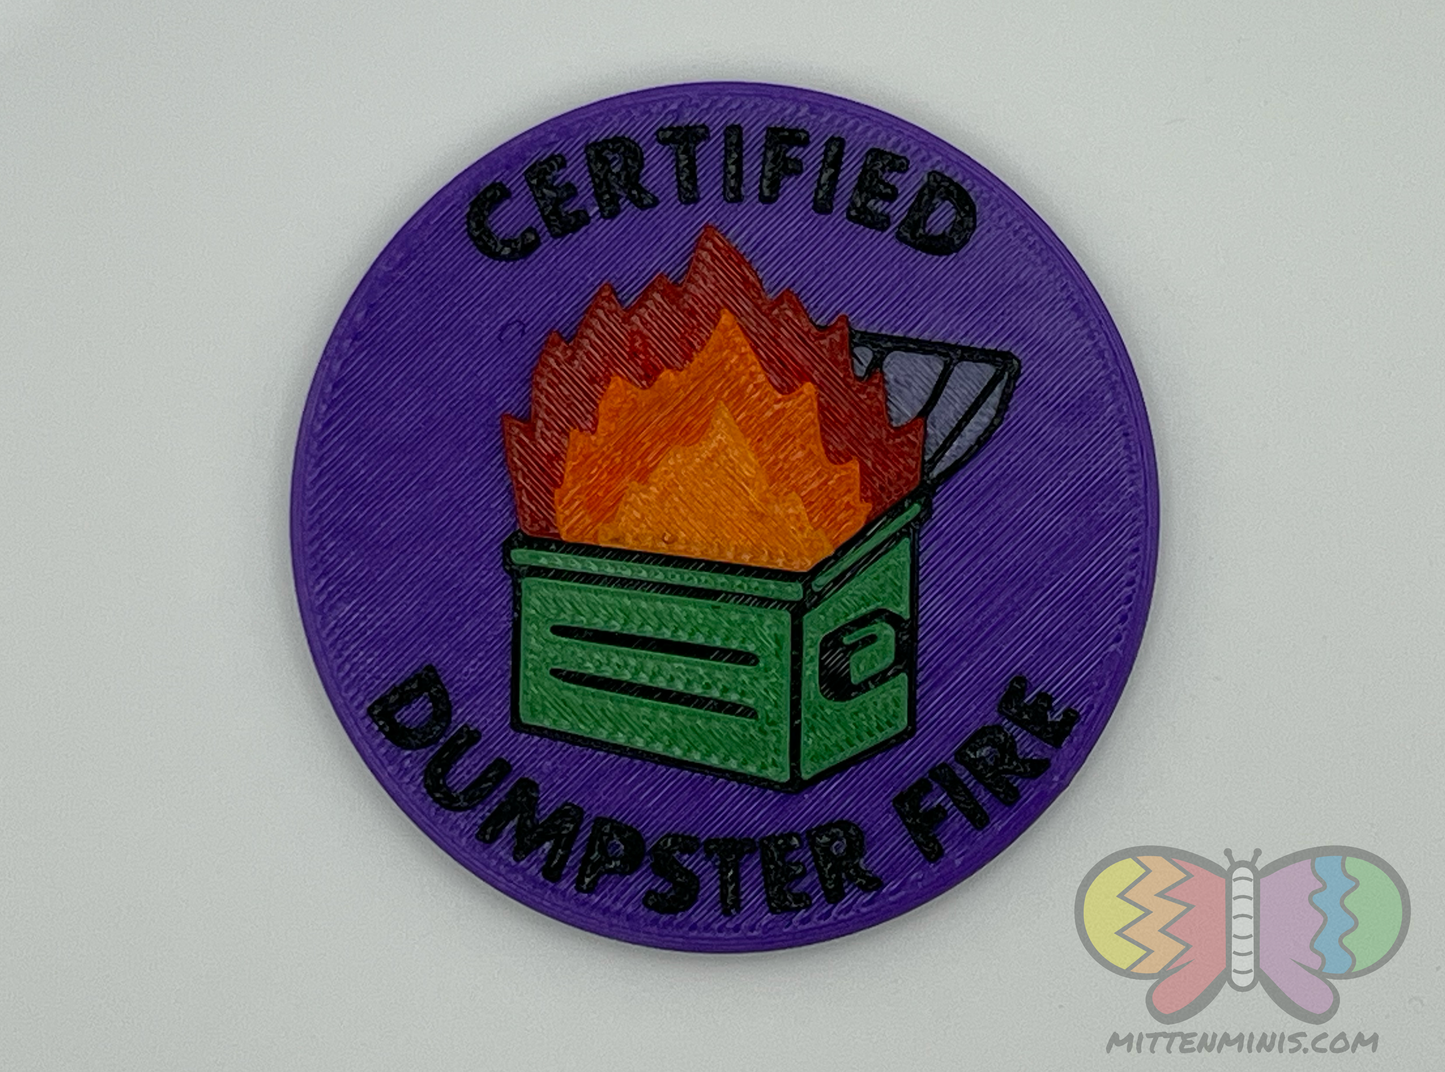 Certified Dumpster Fire - patch